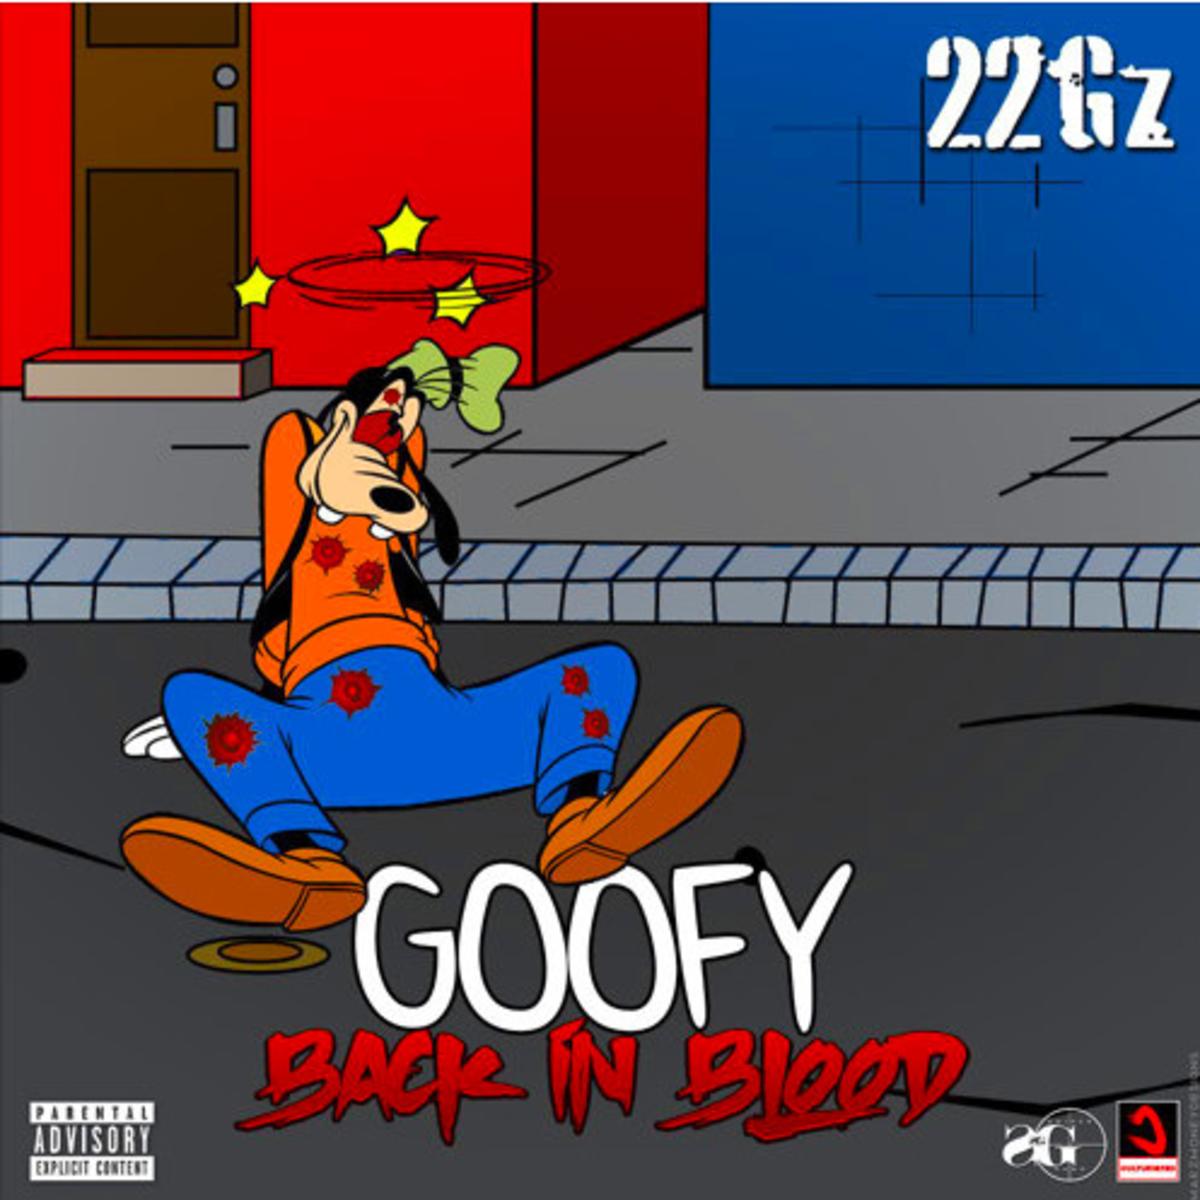 22gz Goofy Back On Blood Audio Lyrics Download Mp3 Foreign Songs Lyrics